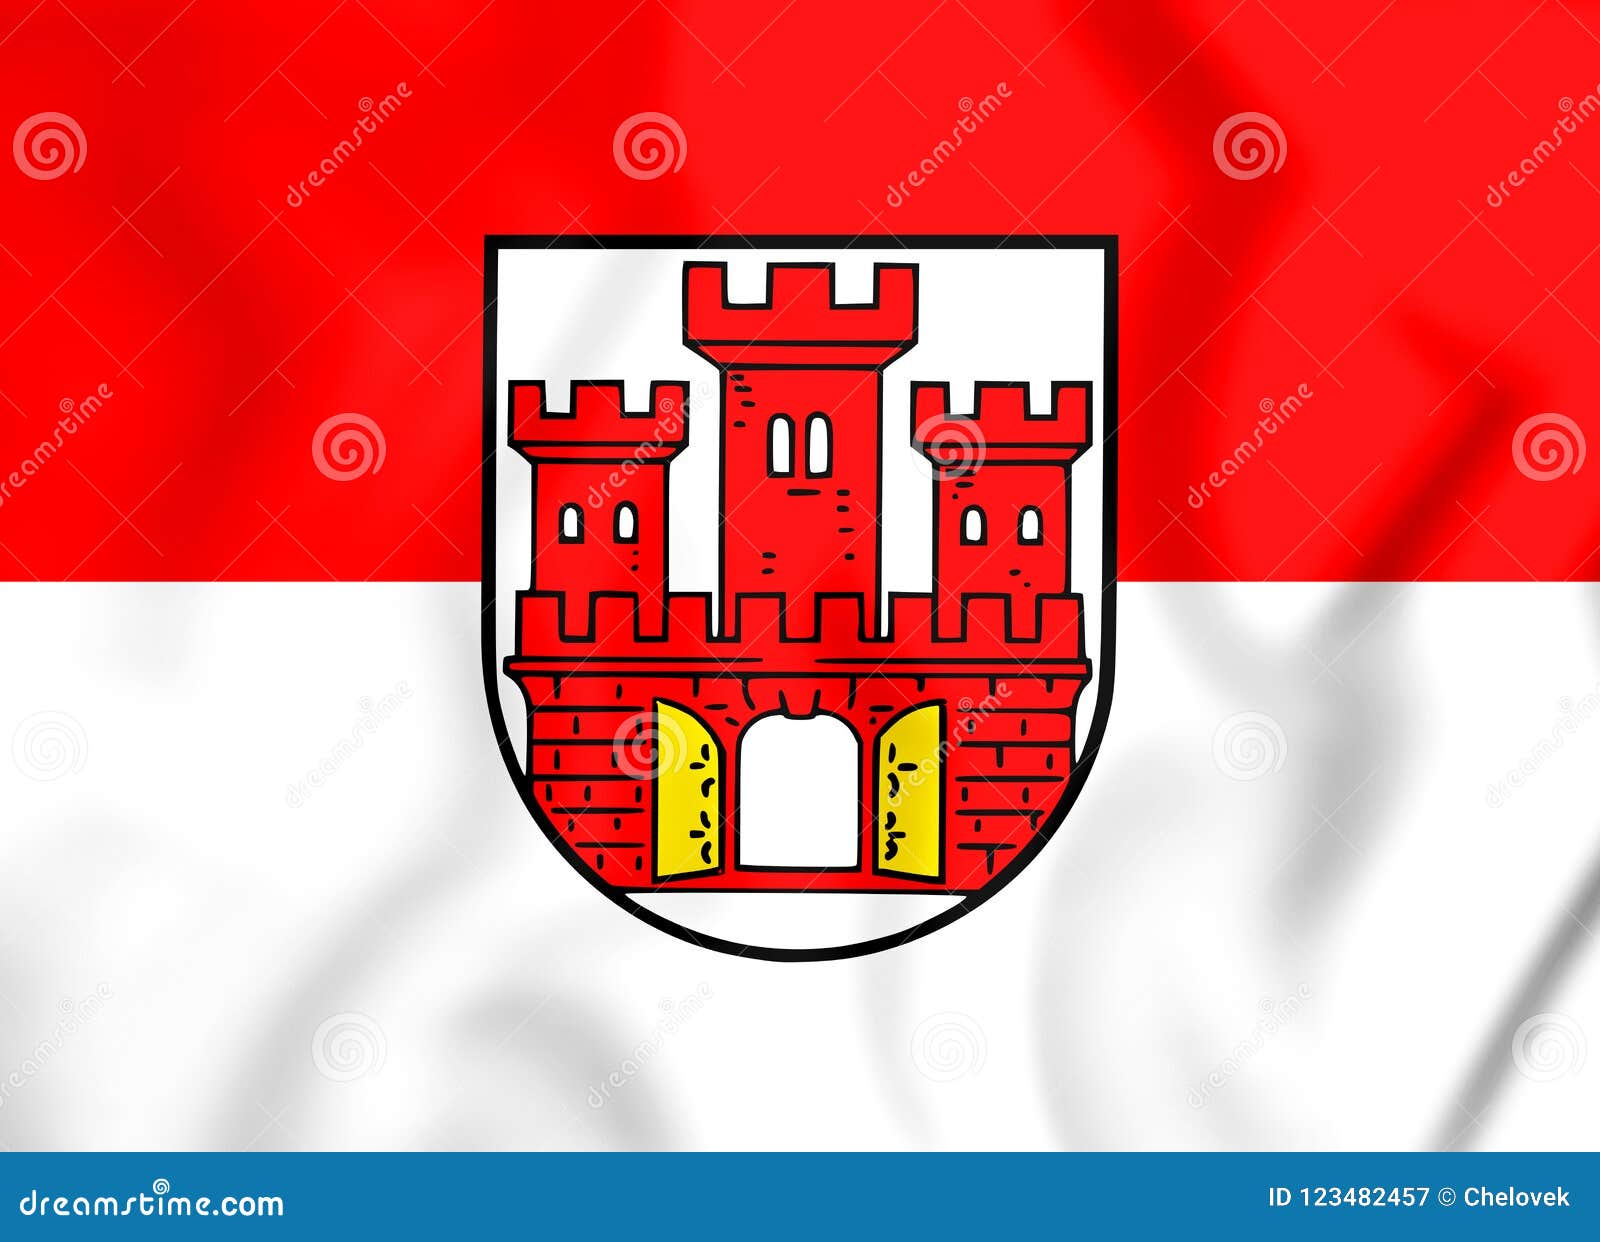 3d flag of weilheim in oberbayern bavaria, germany.